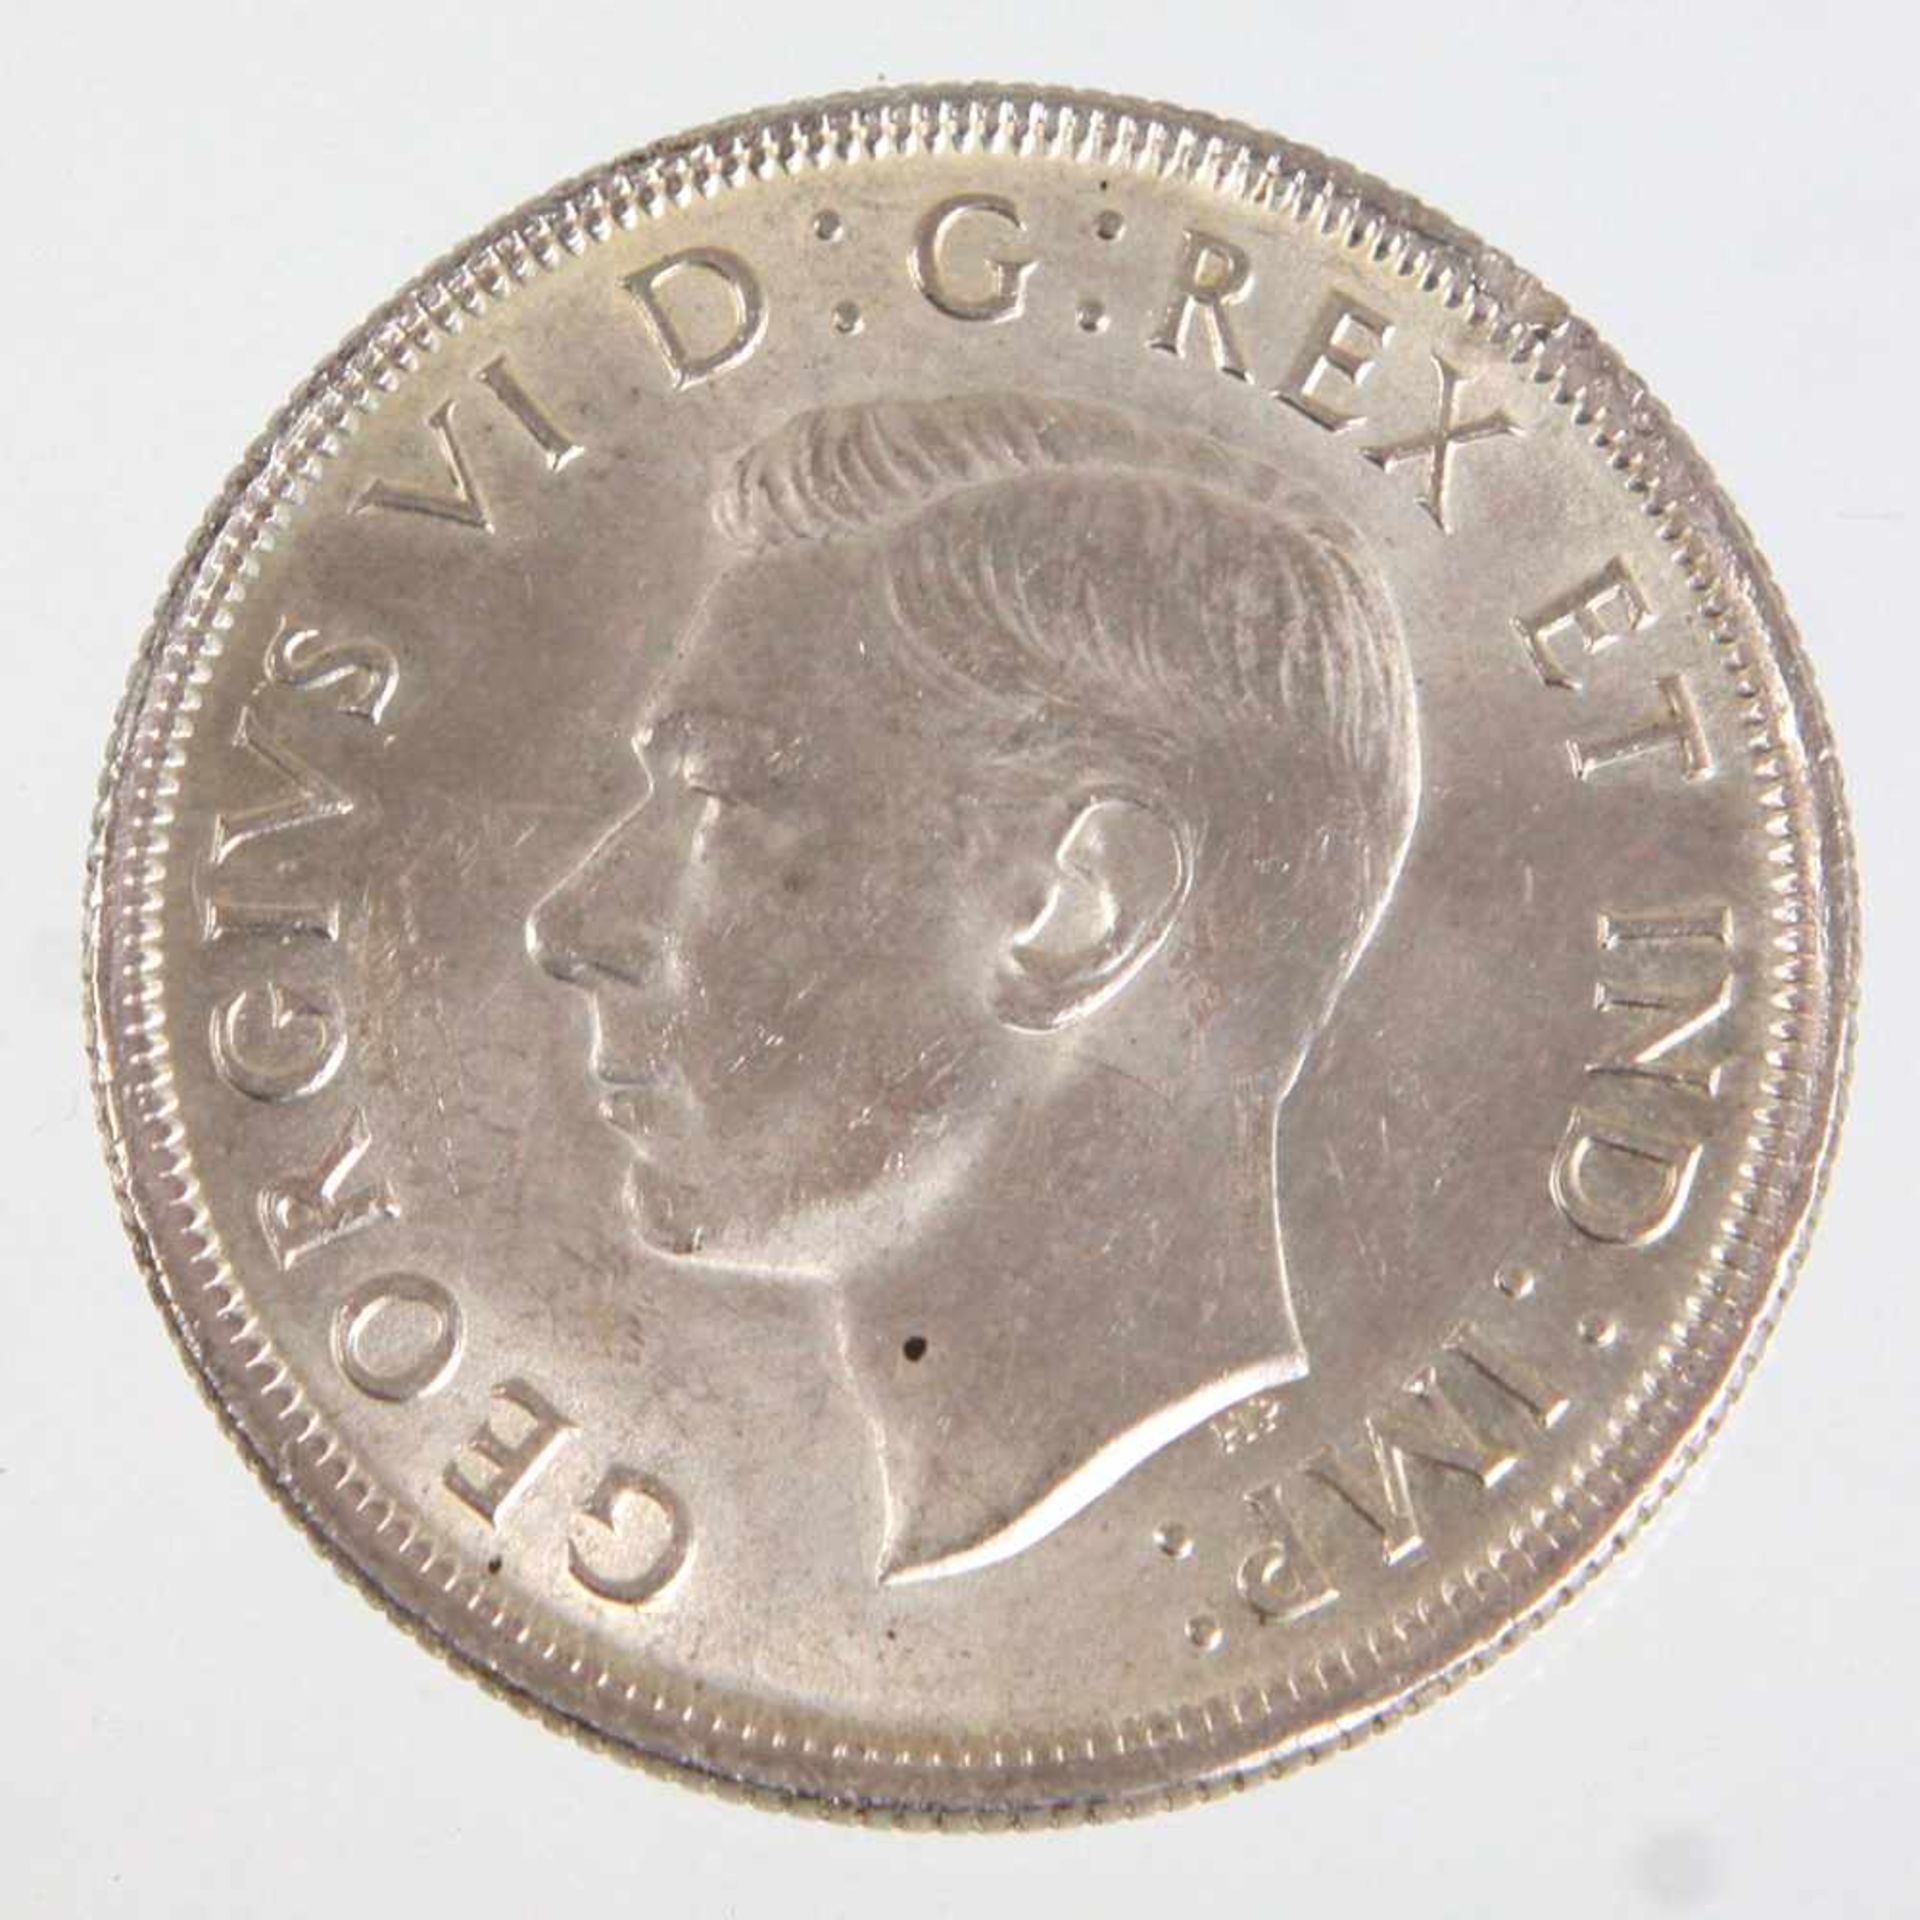 Canada Dollar 1937Silbermünze Canada Dollar mit Voyageur Kanu u. Georg VI, Ø ca. 36 mm, Gewicht